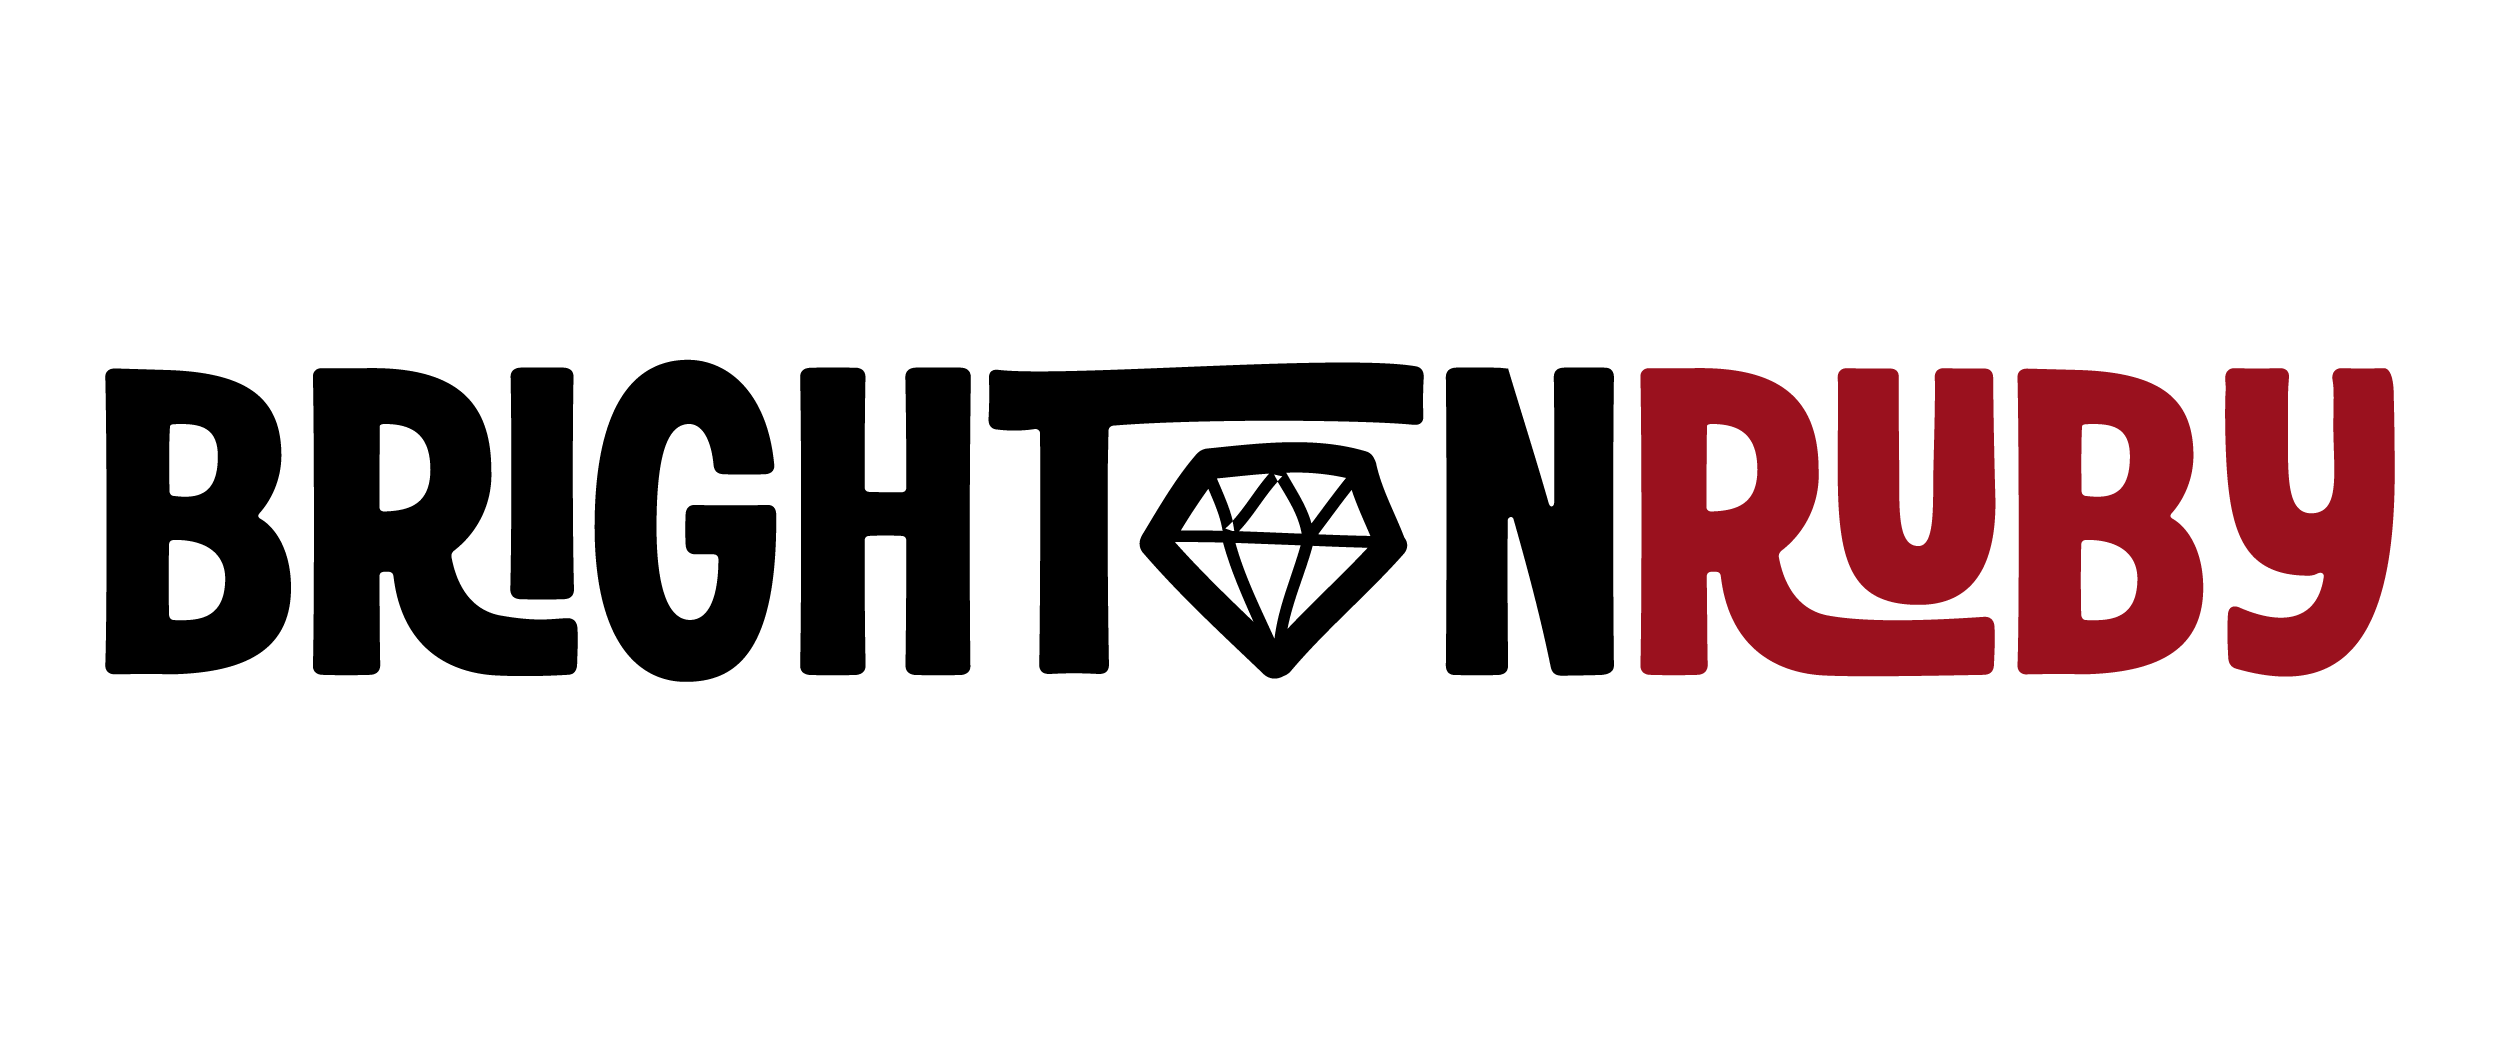 One Ruby Thing logo